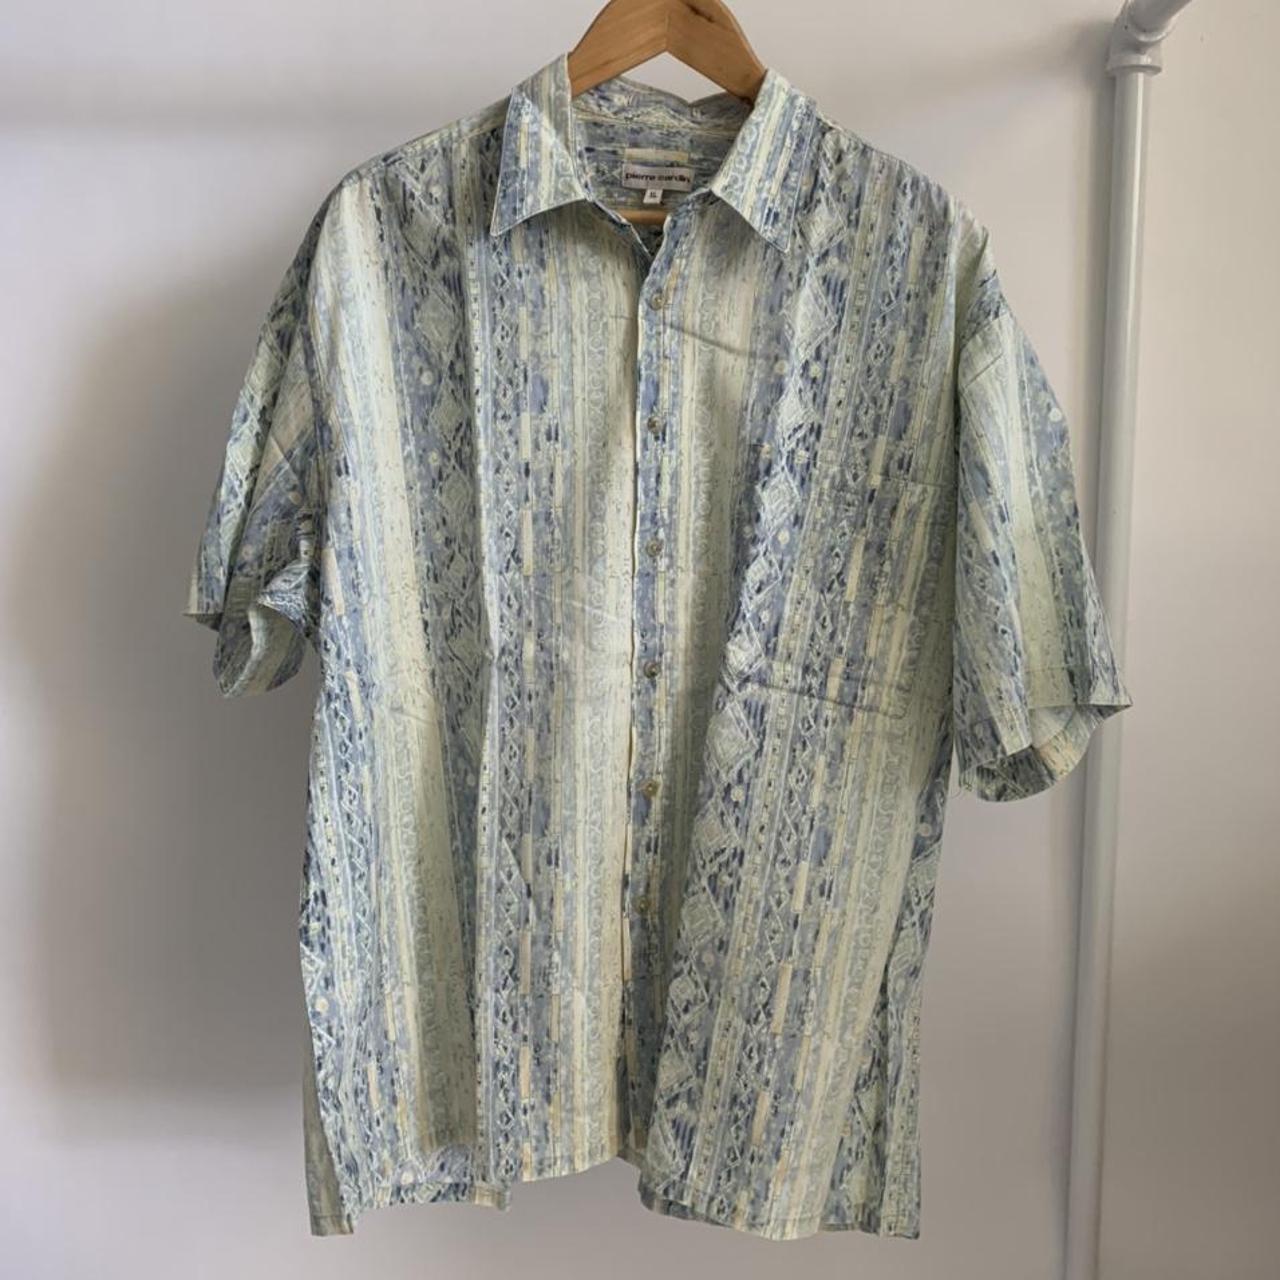 Pierre Cardin Men's Shirt | Depop